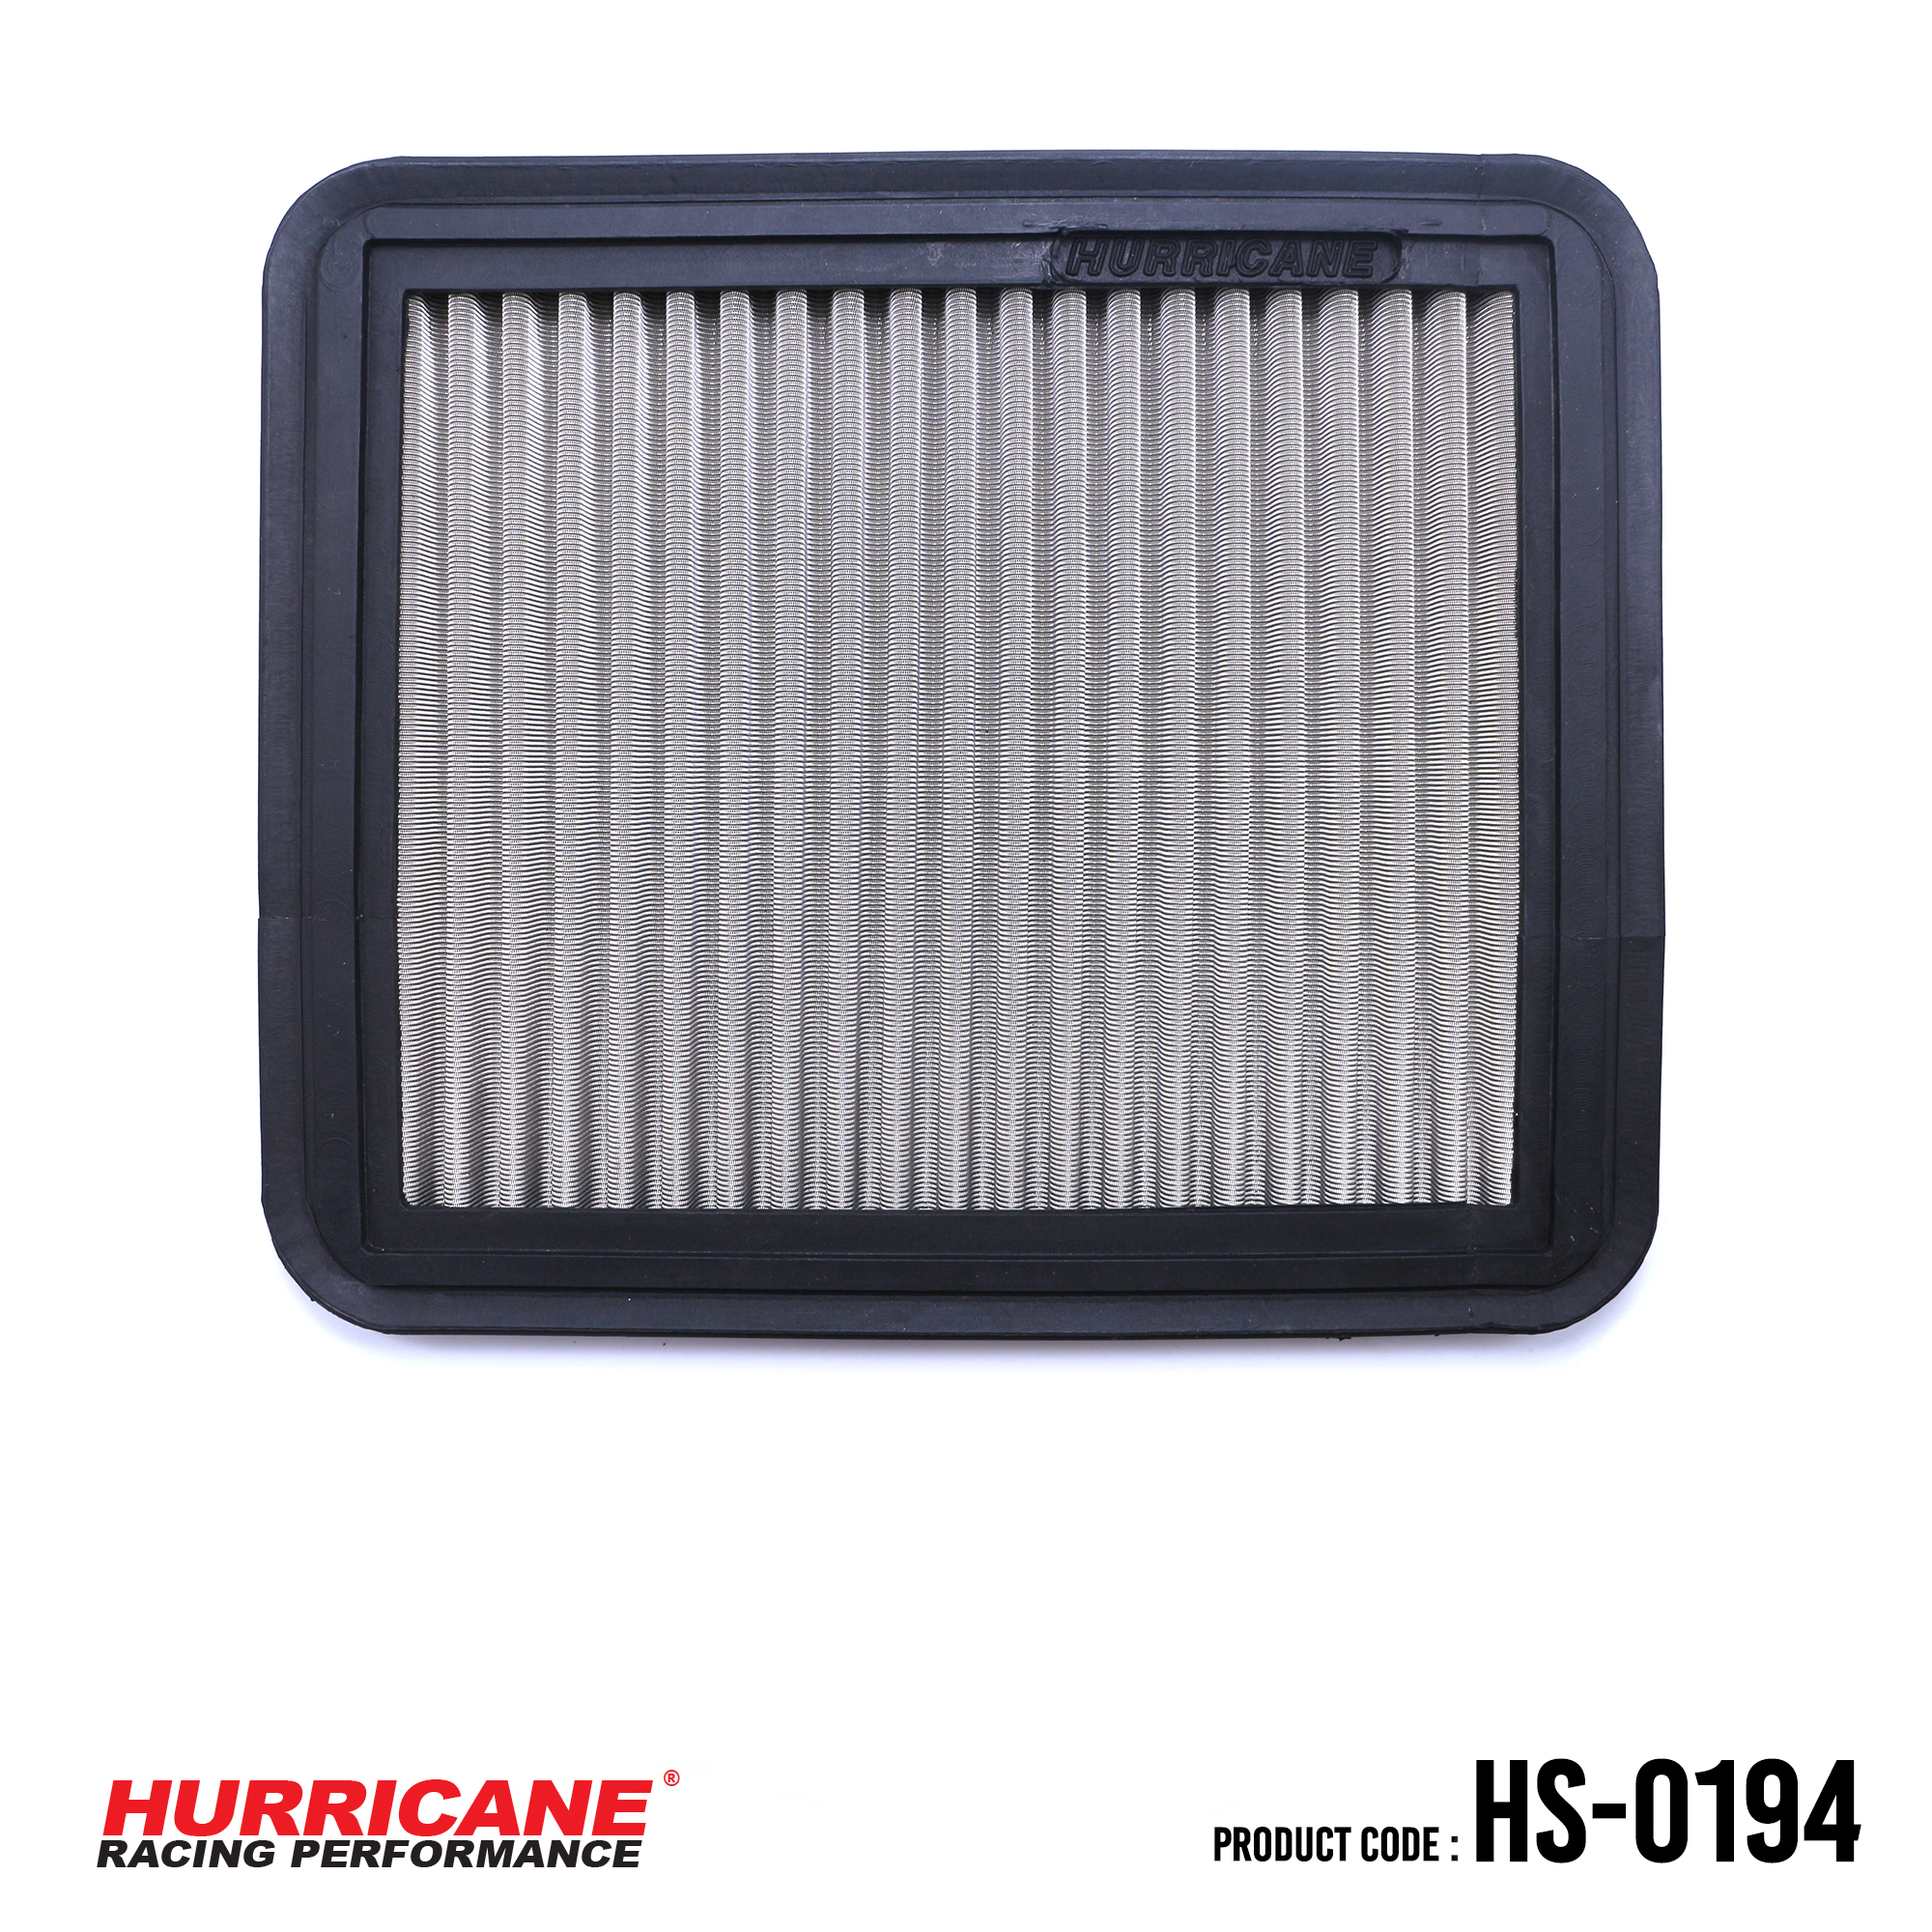 HURRICANE STAINLESS STEEL AIR FILTER FOR HS-0194 Chevrolet